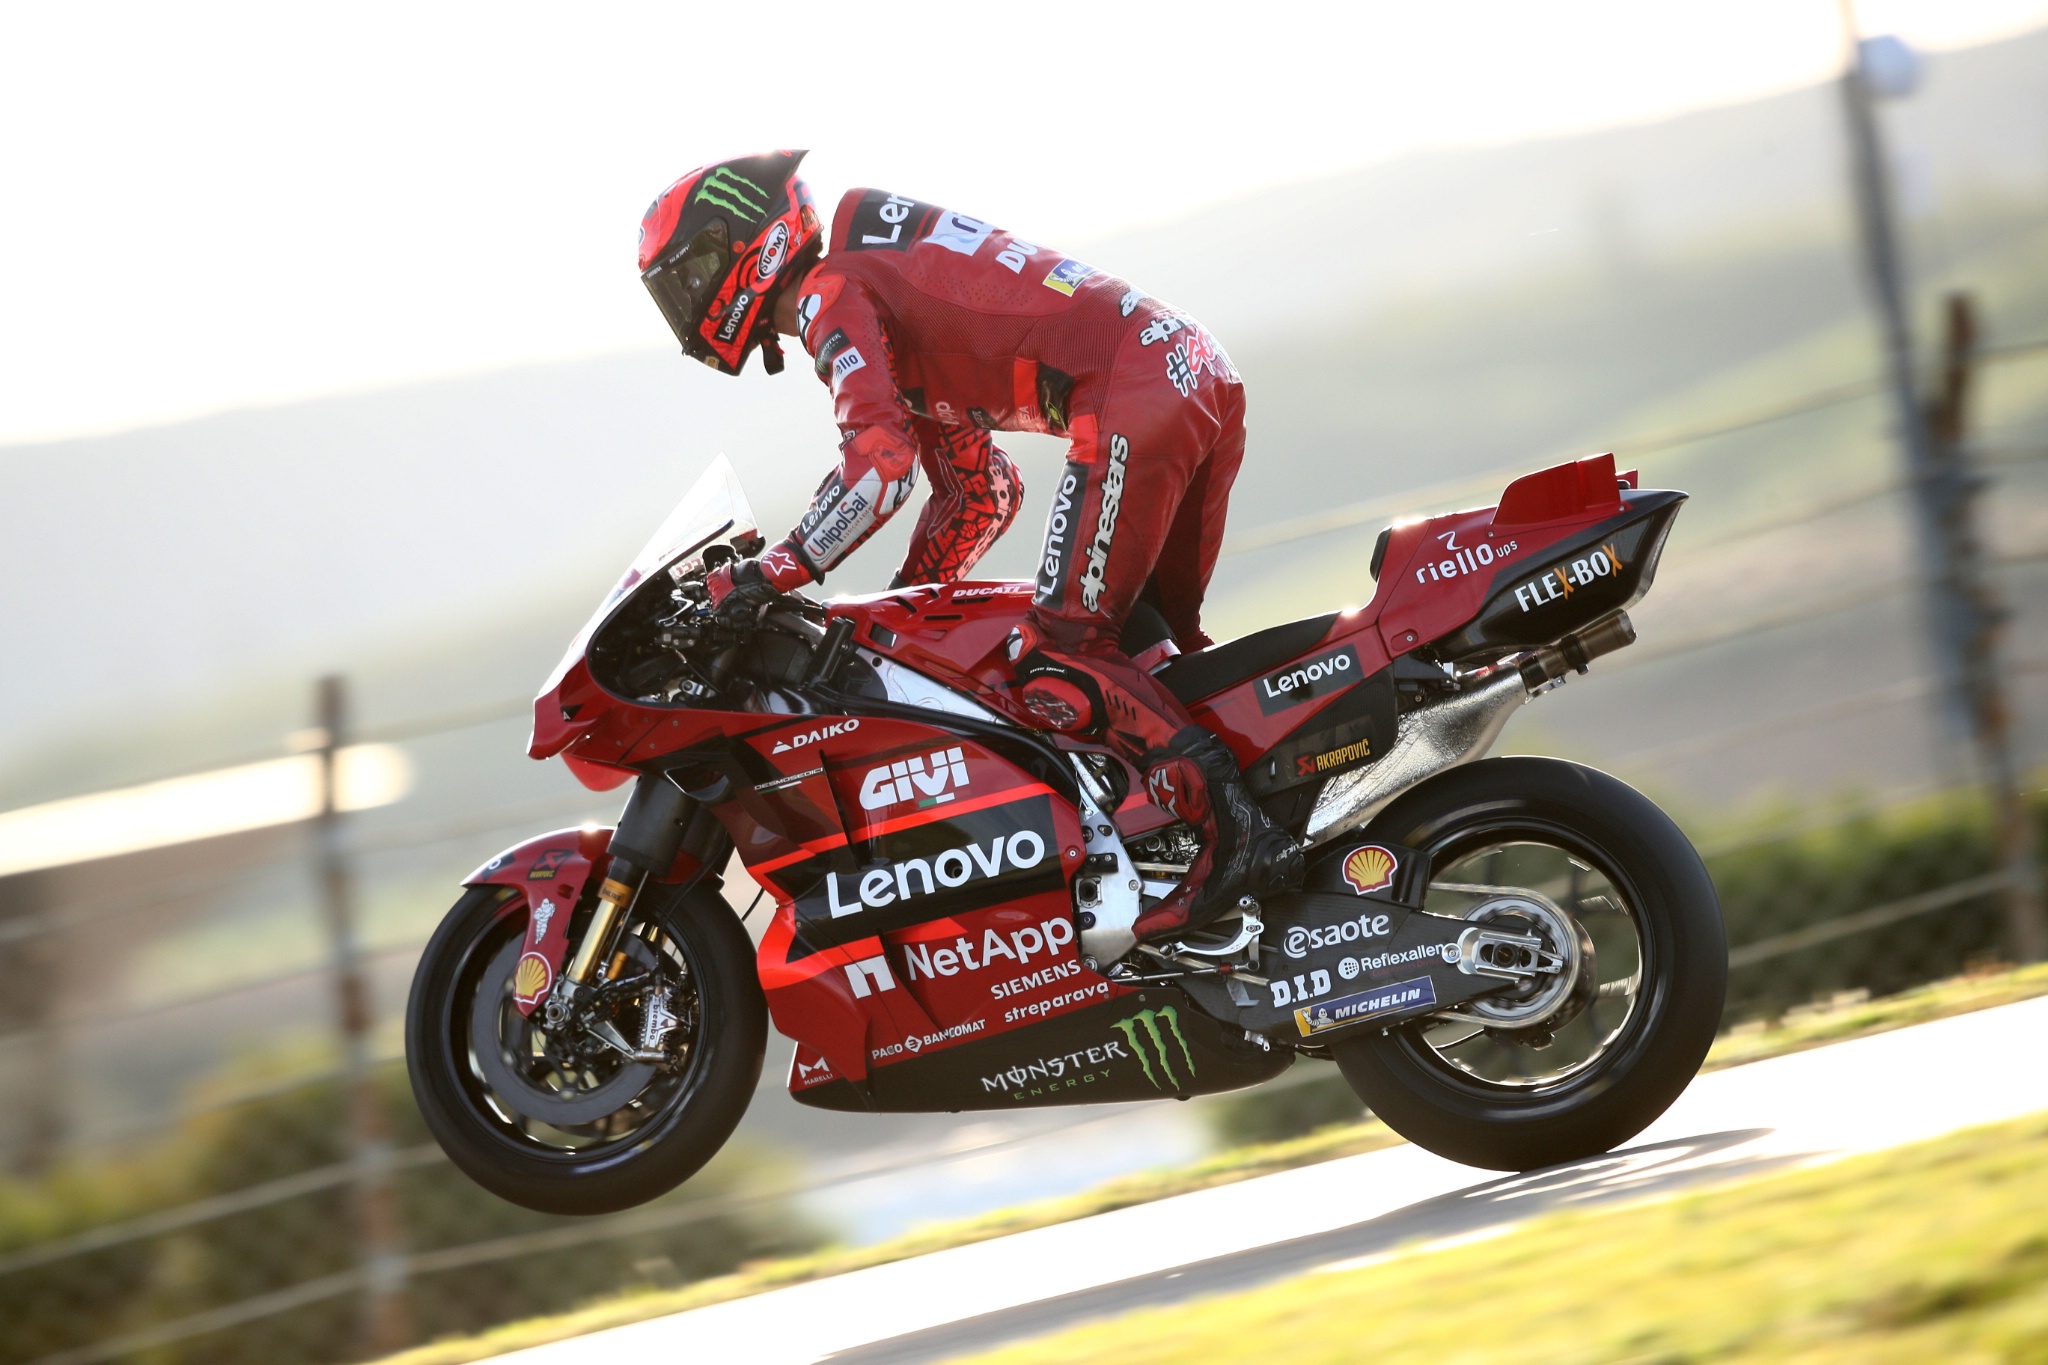 Francesco Bagnaia , Portimao MotoGP test, 11 March